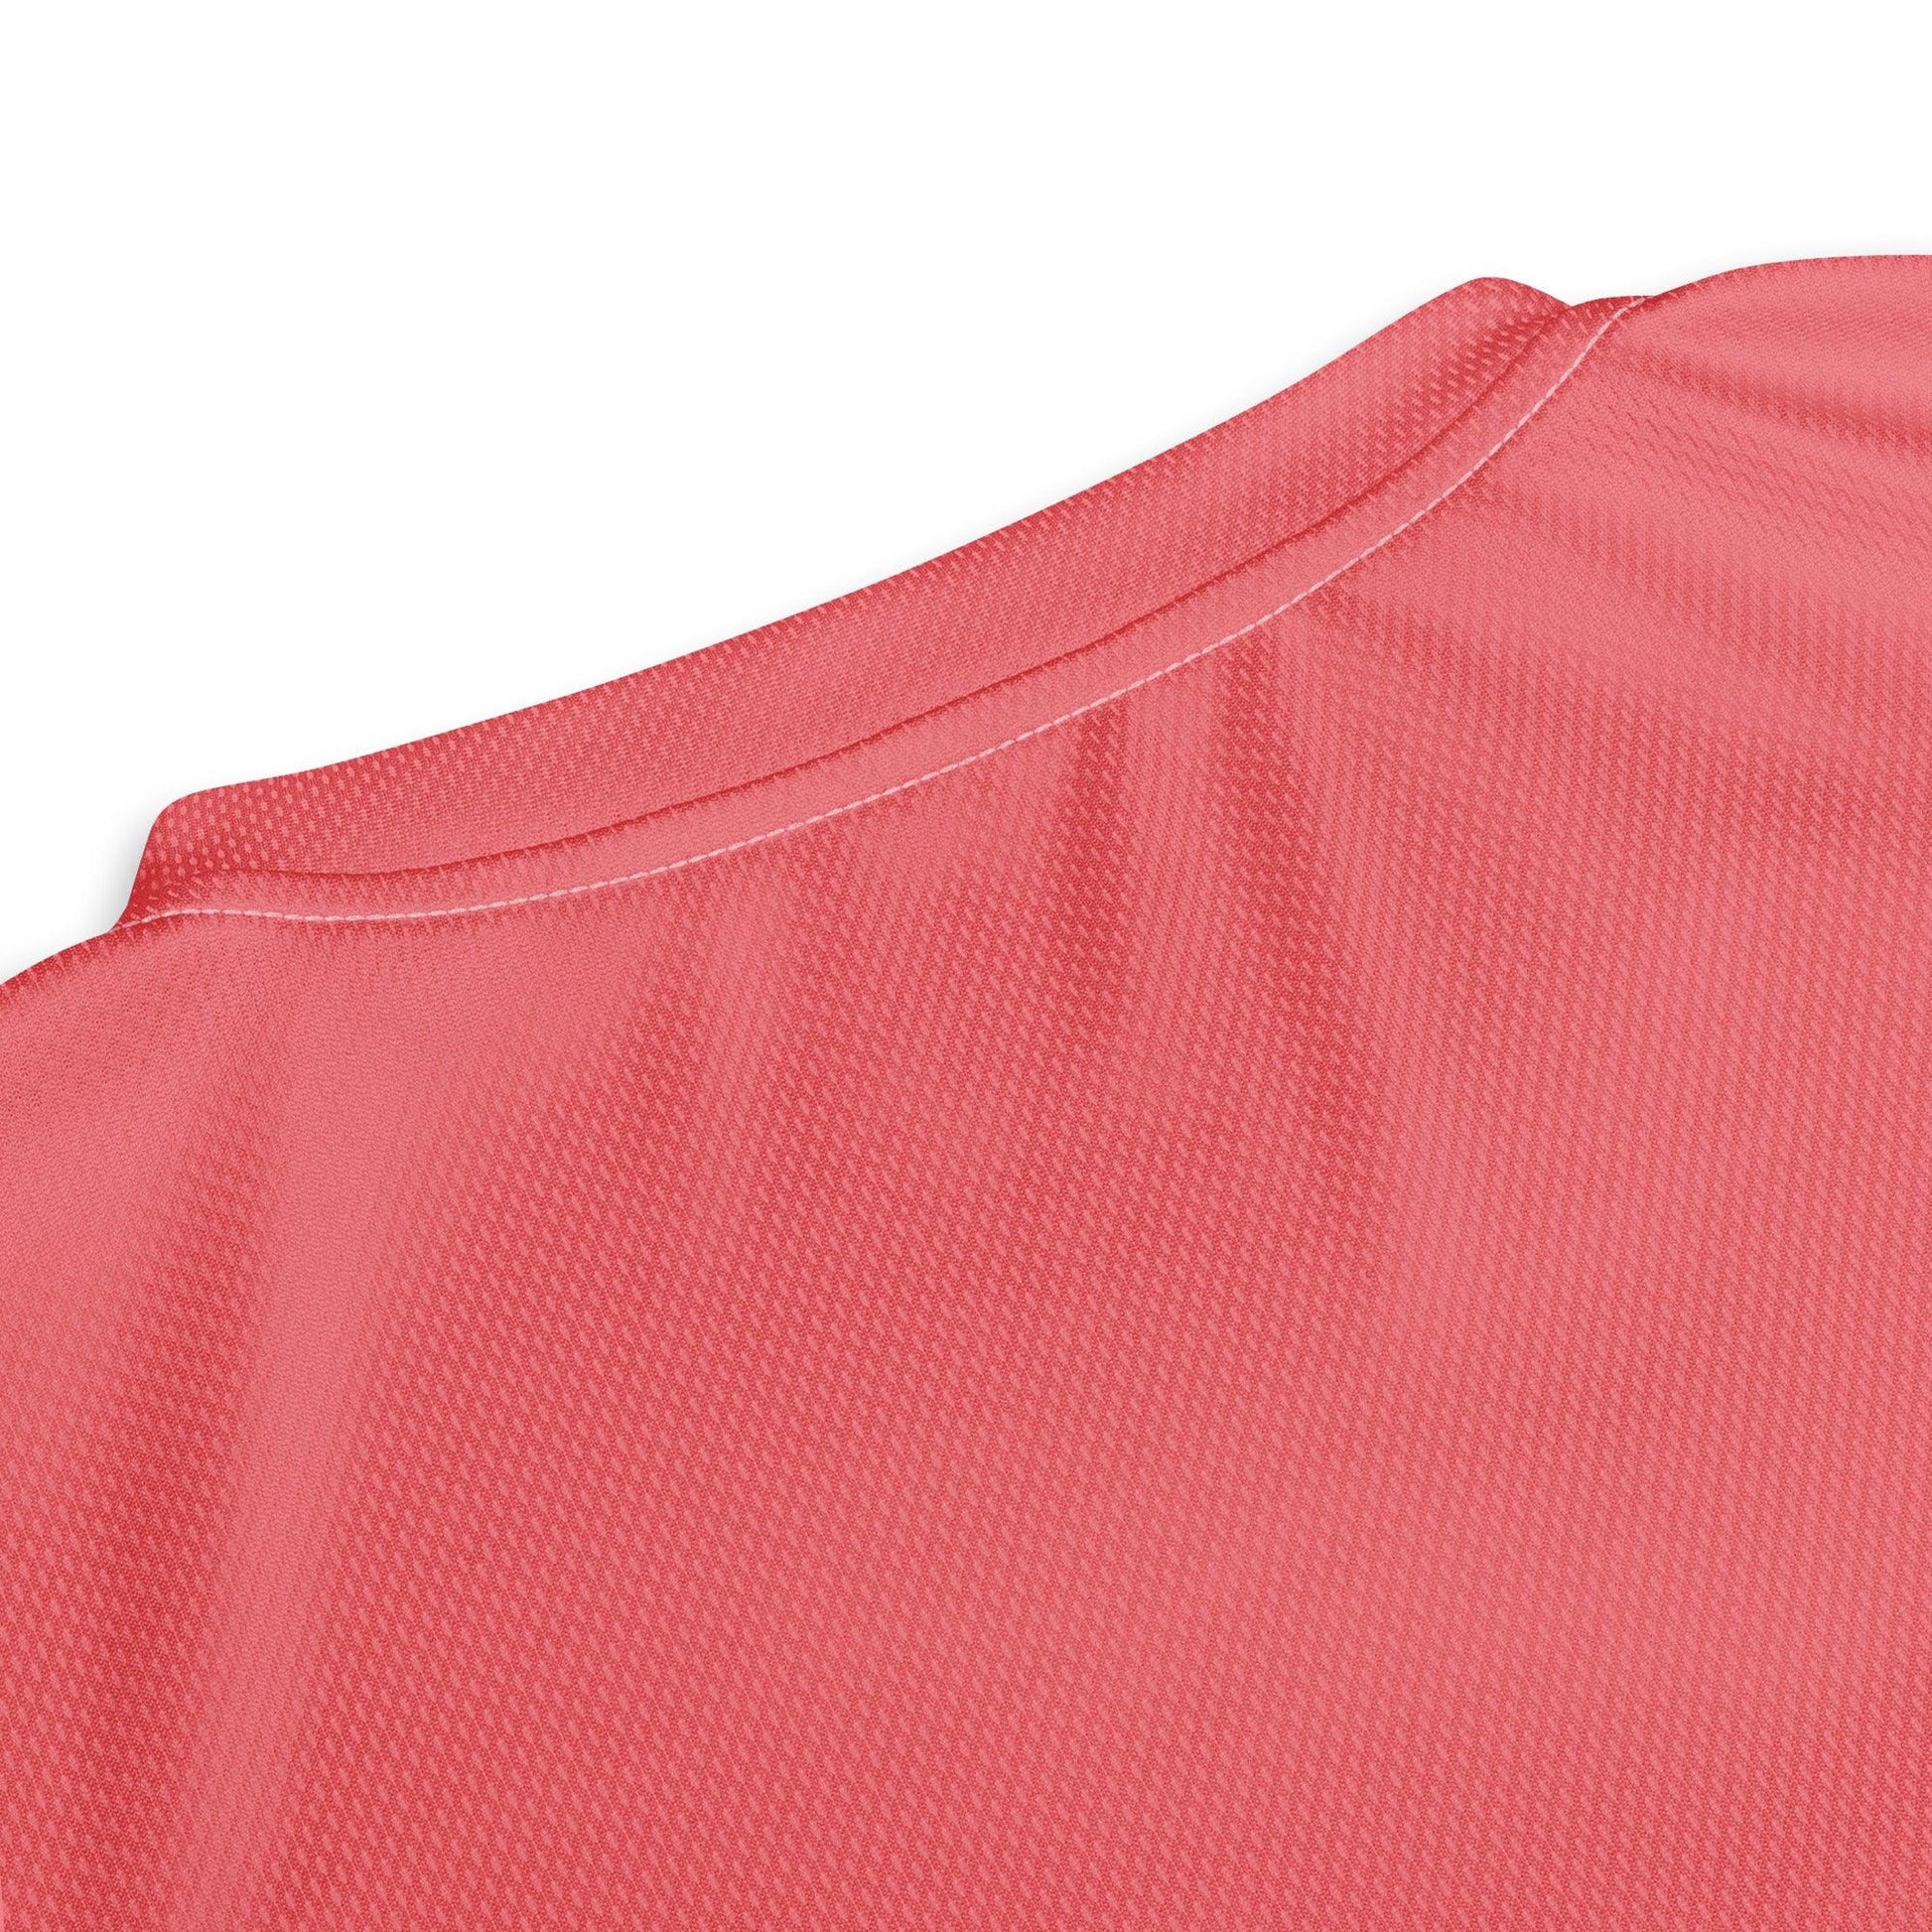 SouthPaw Bowling Jersey - Pink Rose - southpaw custom apparel